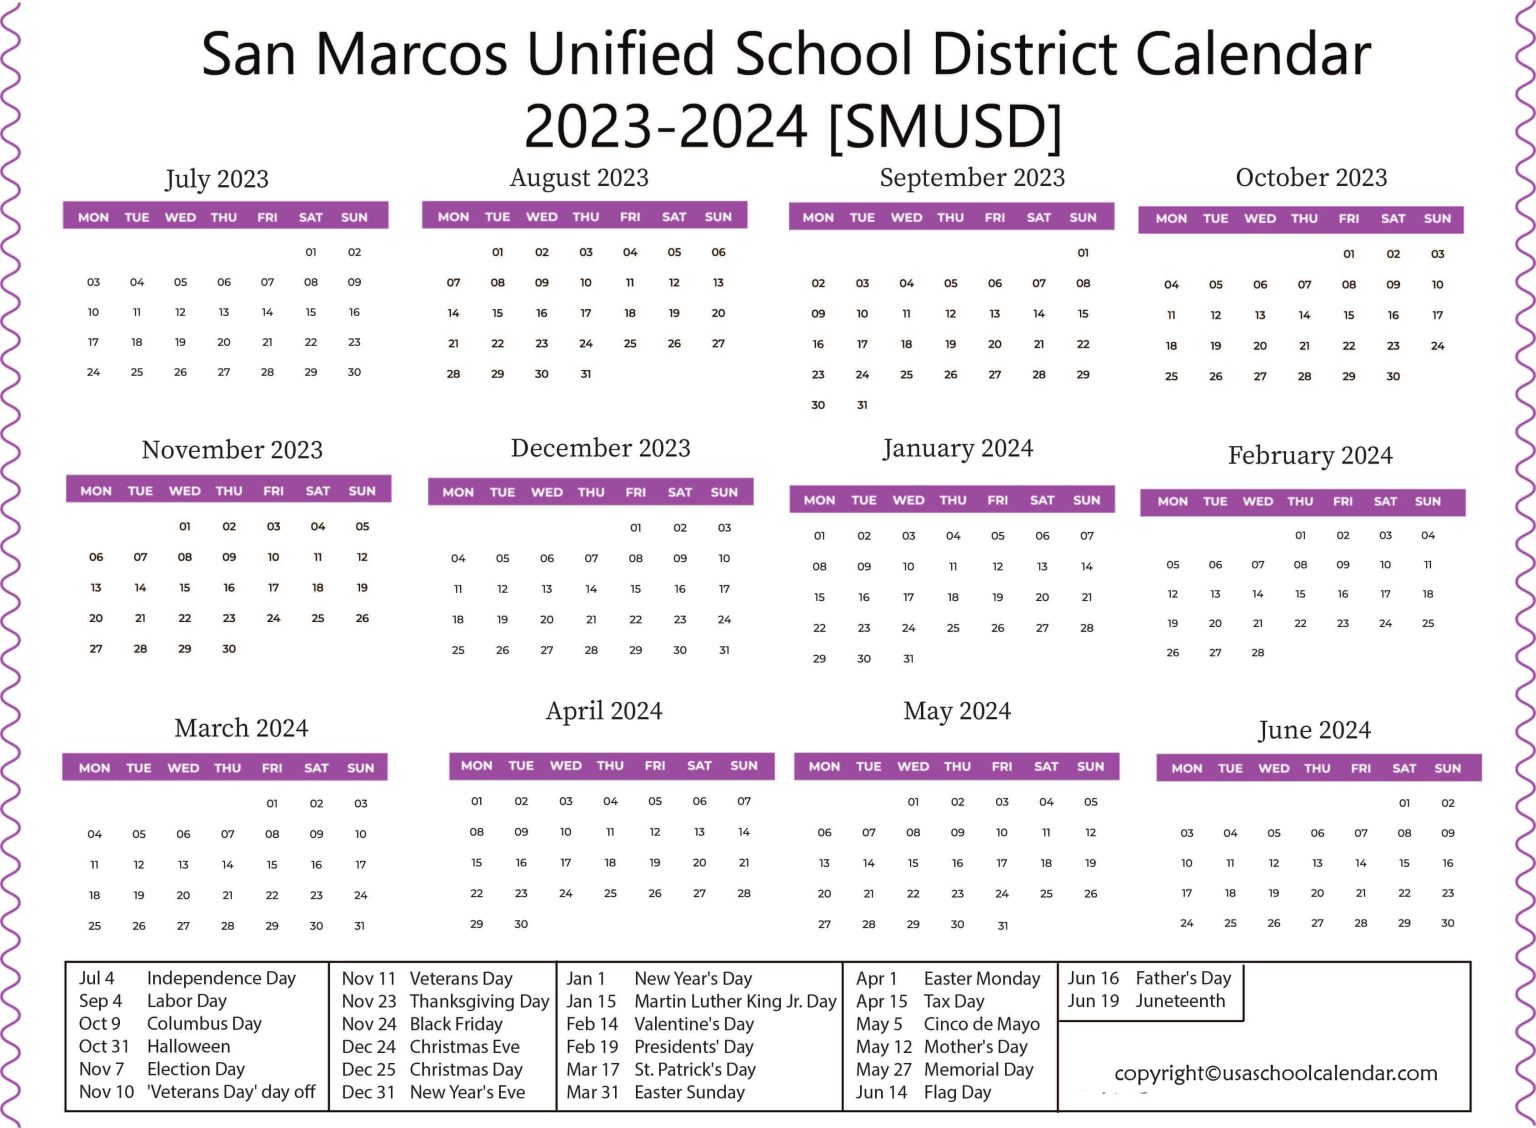 san-marcos-unified-school-district-calendar-2023-24-smusd